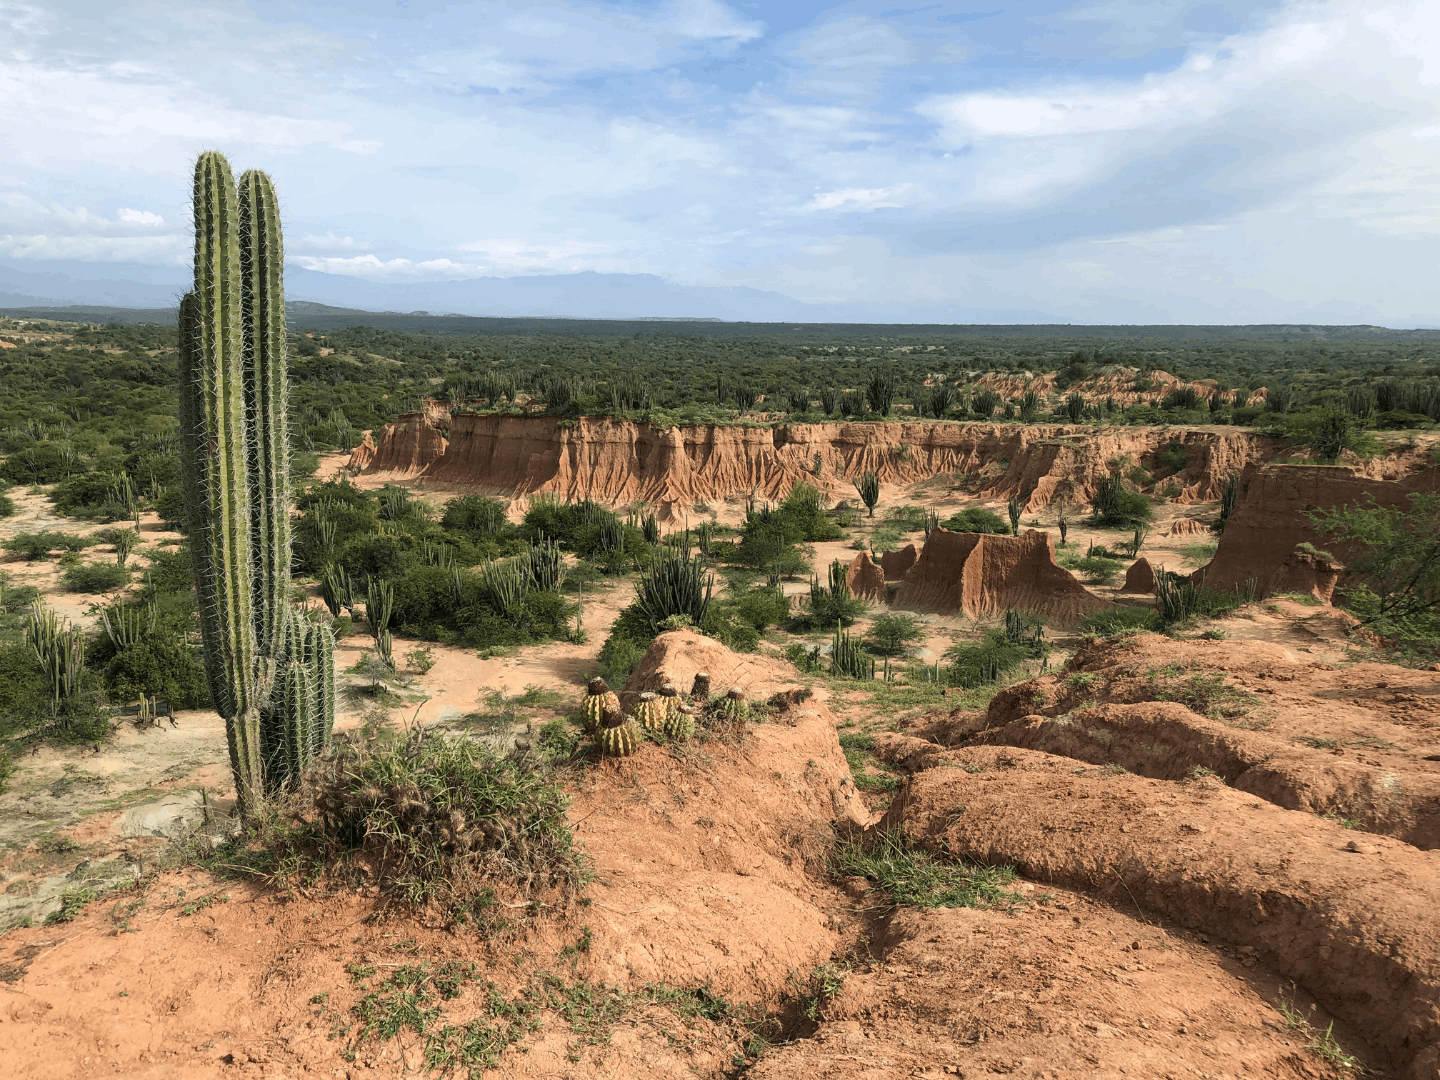 Deserto, stelle e vestigia del Miocene.